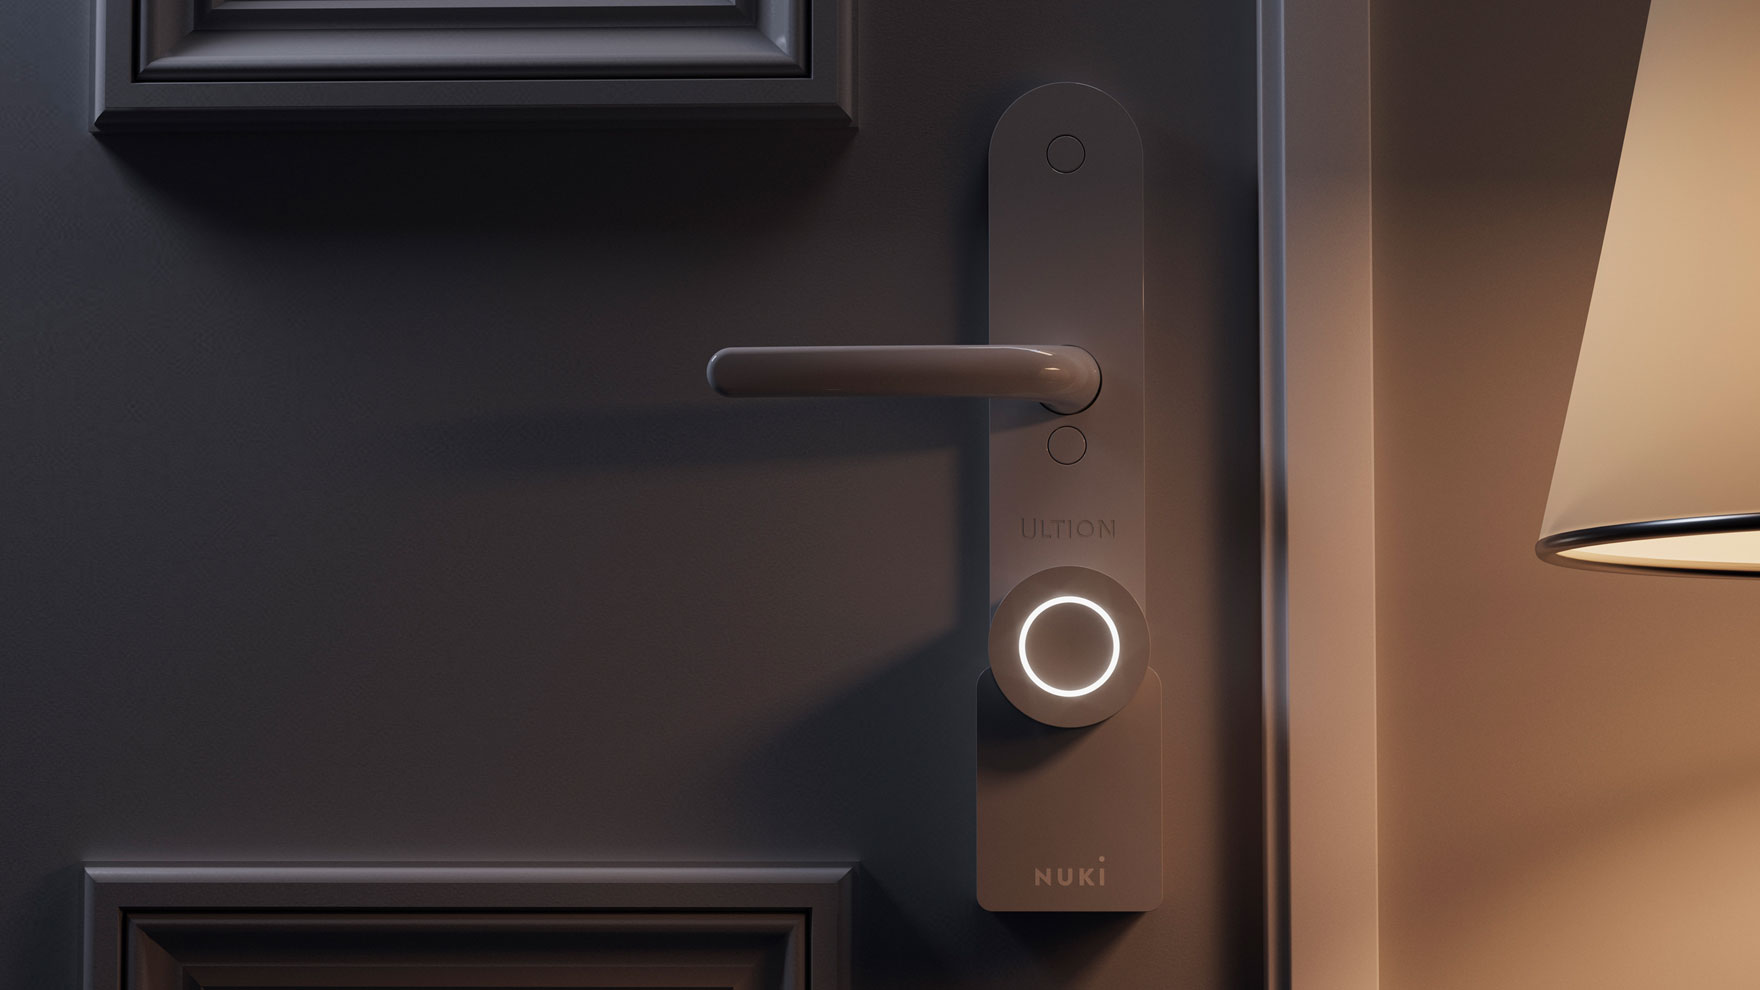 Nuki smart lock - The keyless door lock for Airbnb hosts - Simple